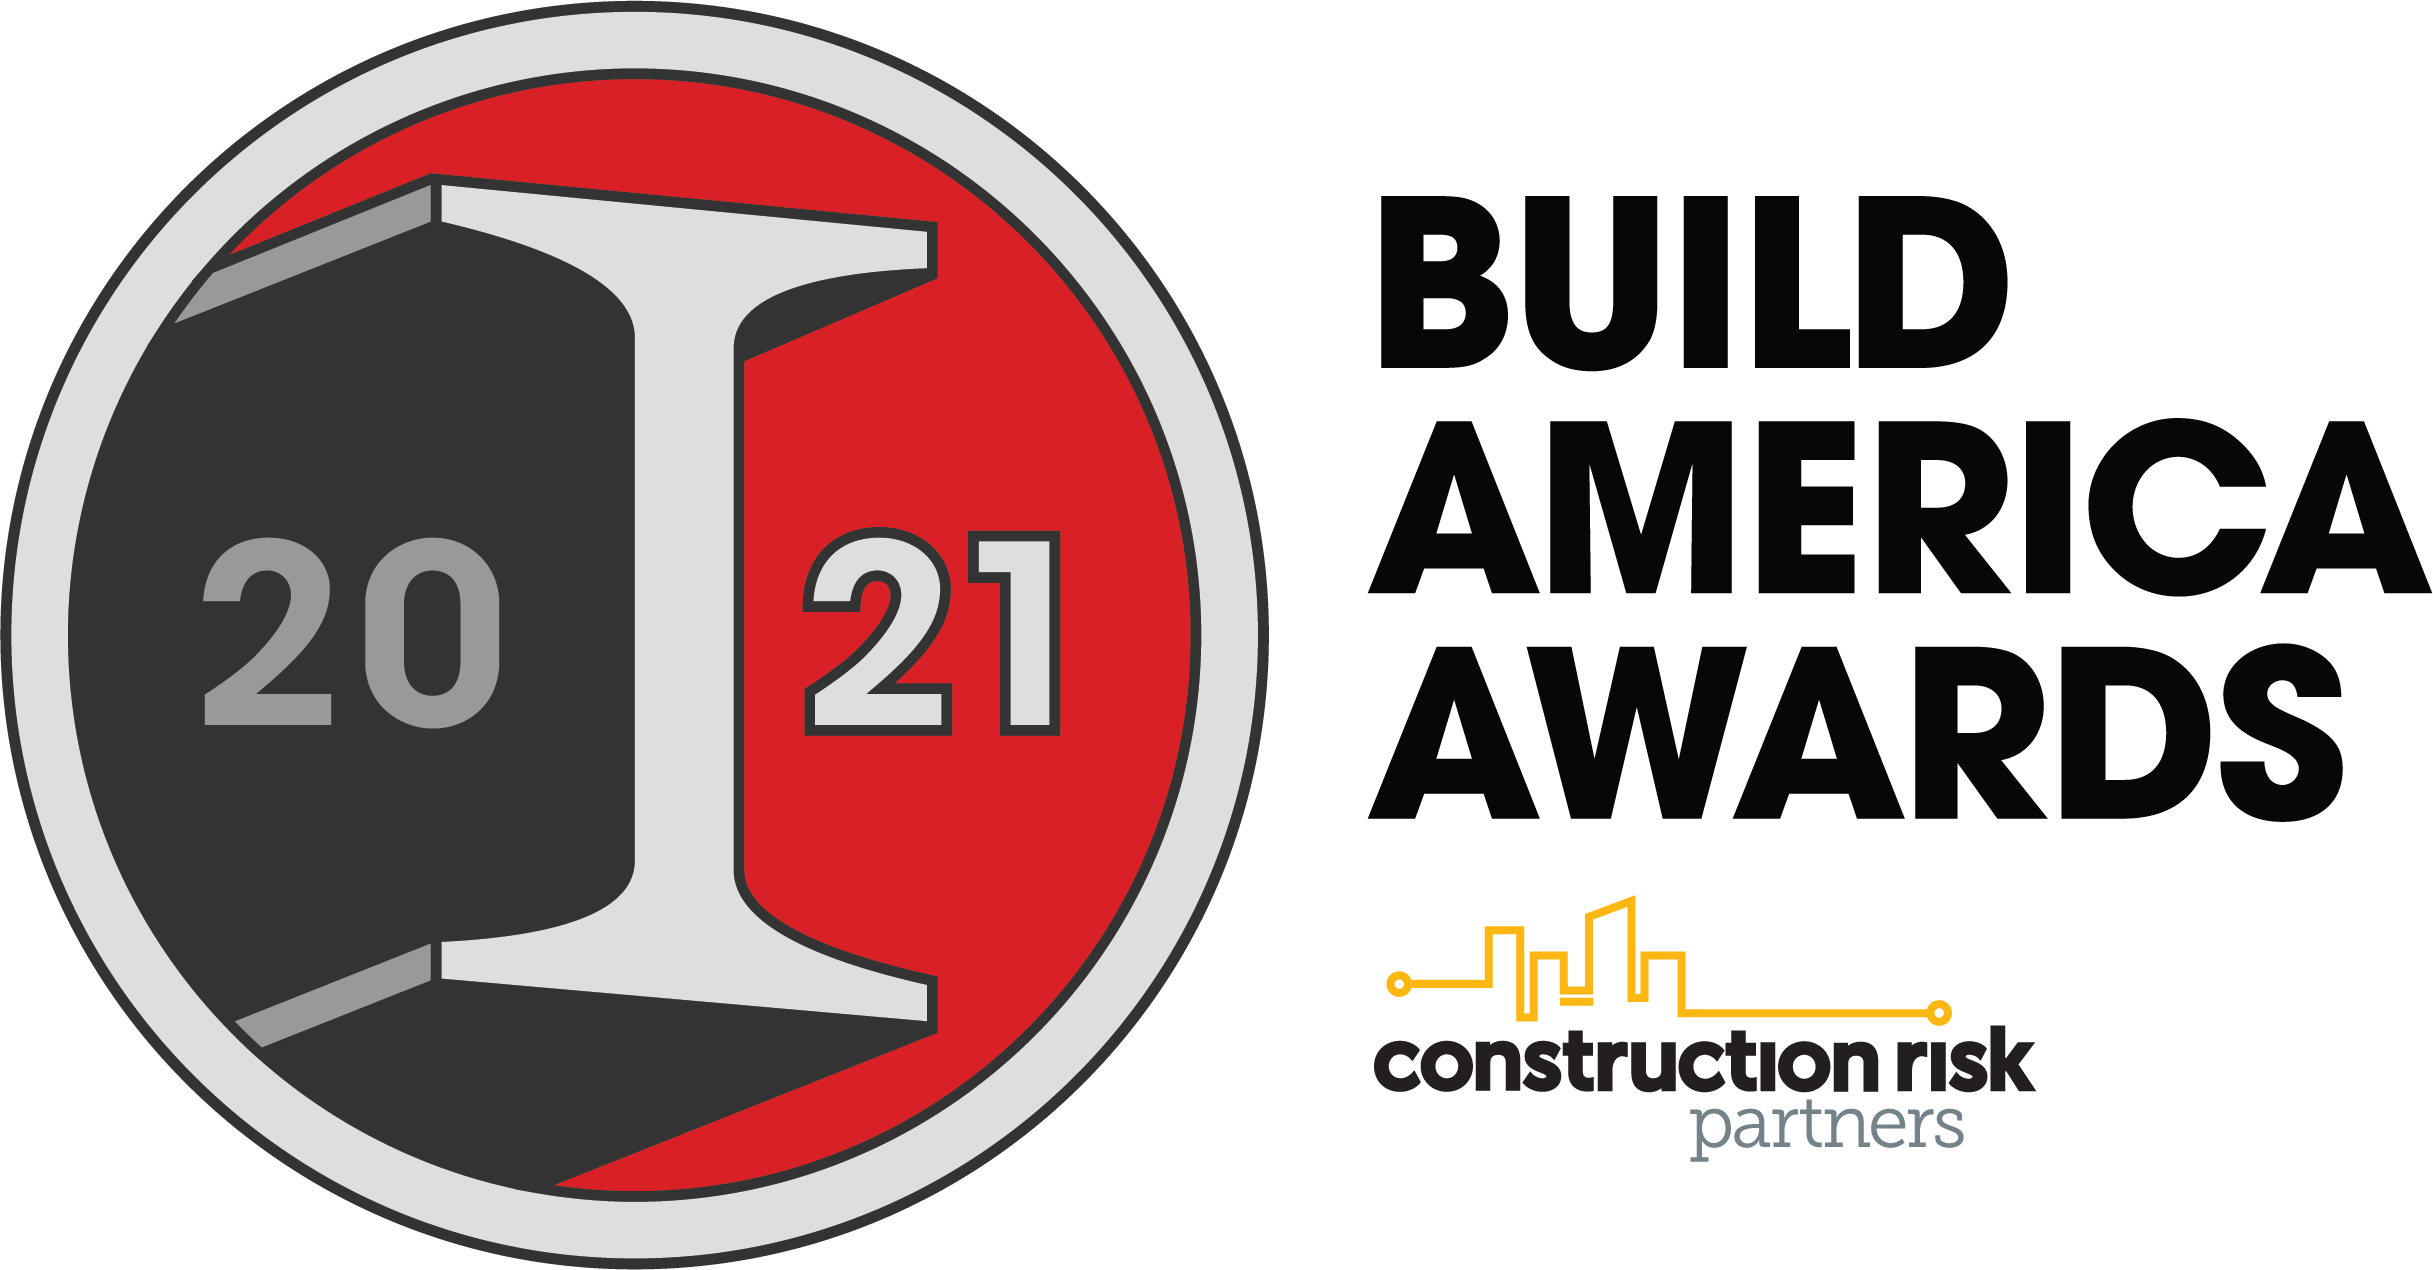 Build America Awards logo